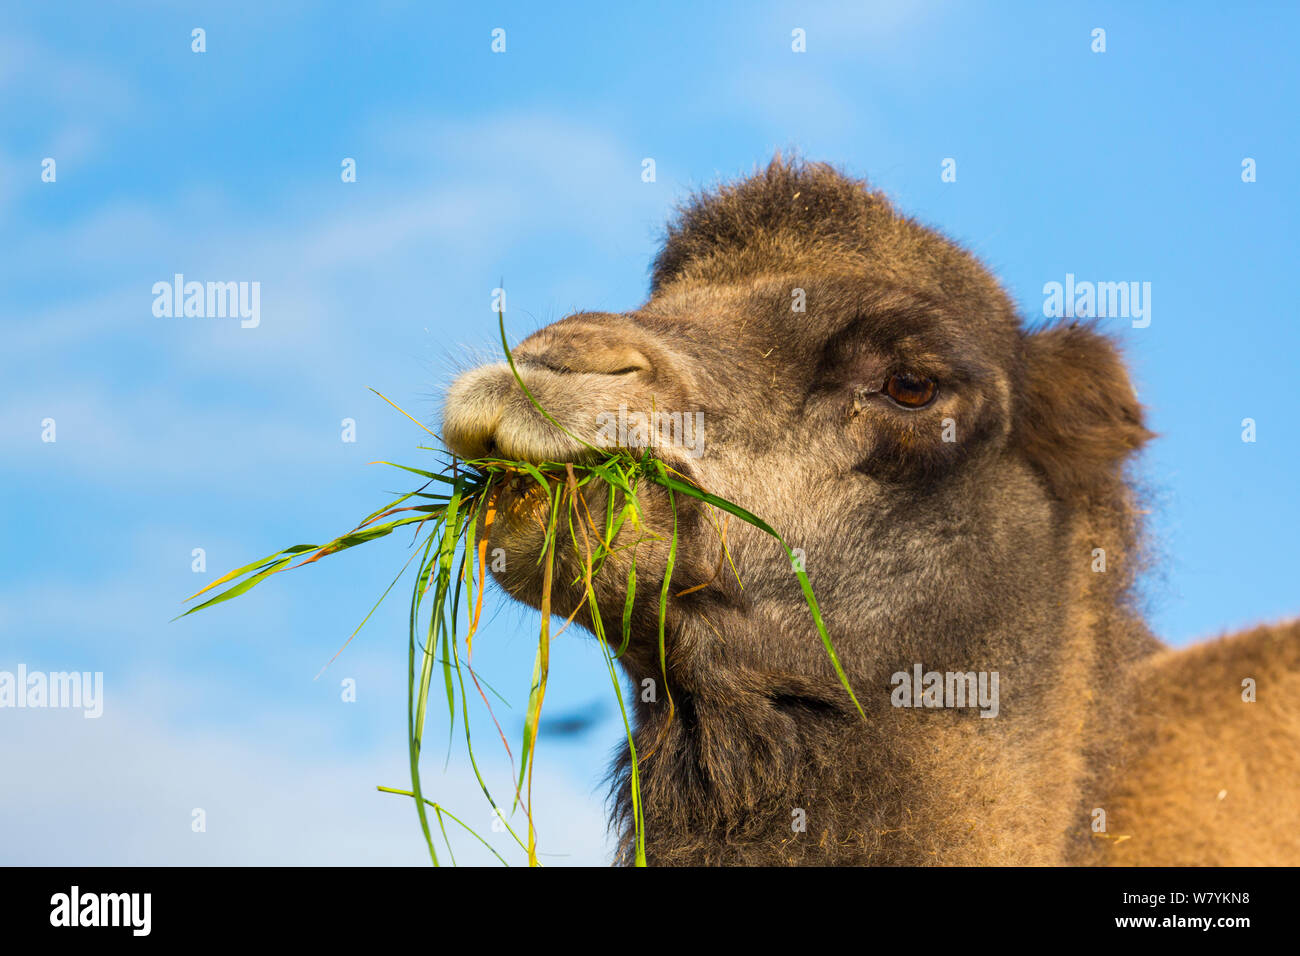 Bactrian camel (Camelus bactrianus) mangiare erba, Copenhangen Zoo, la Danimarca, l'Europa. Captive, provenienti dall Asia Centrale. Foto Stock